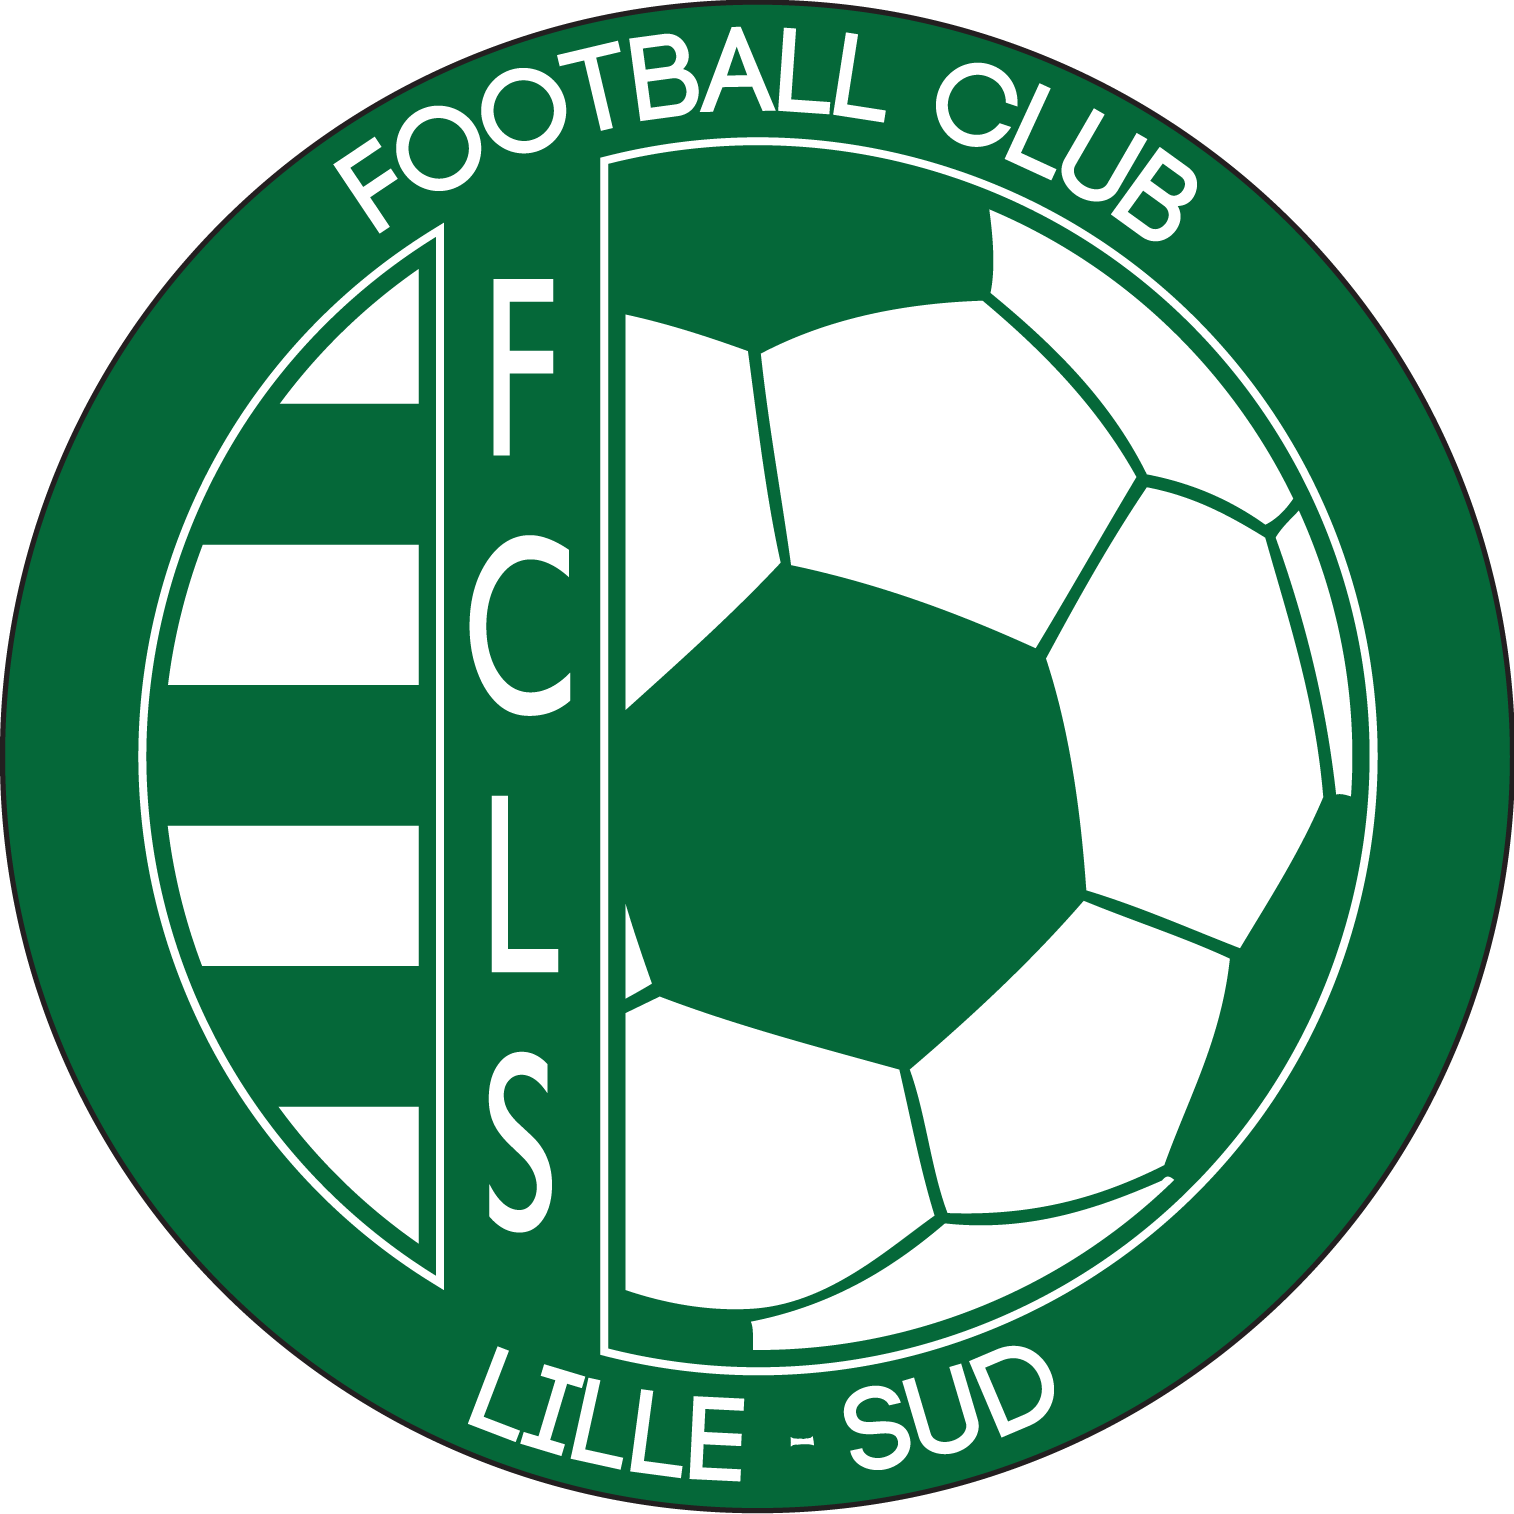 Lille Sud logo